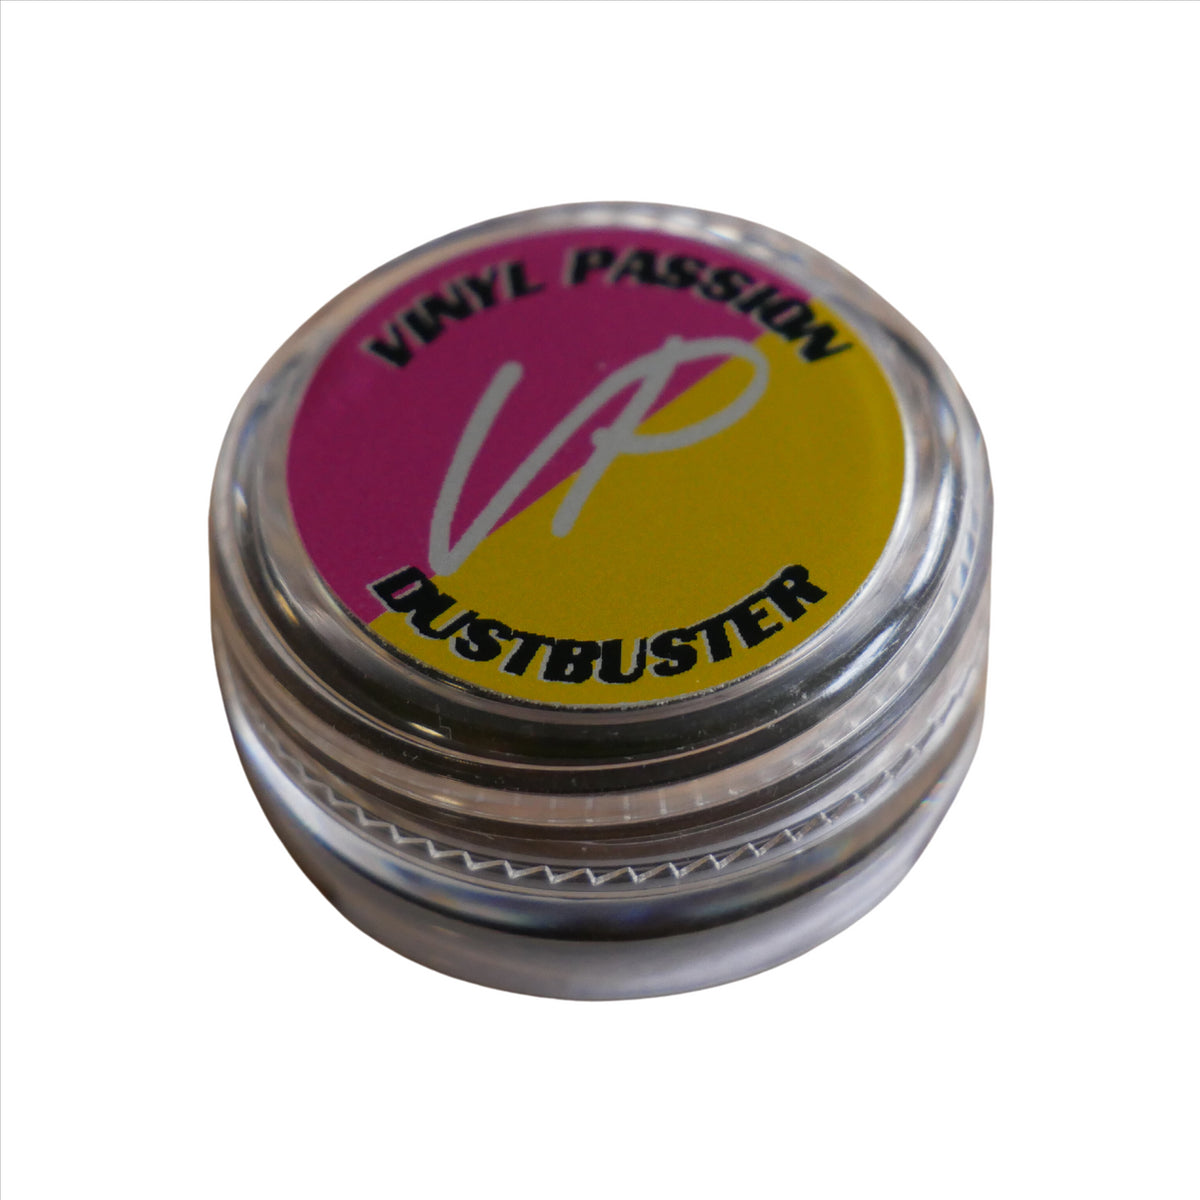 Vinyl Passion Dust Buster - Stylus Cleaner & Preserver Polymer Gel